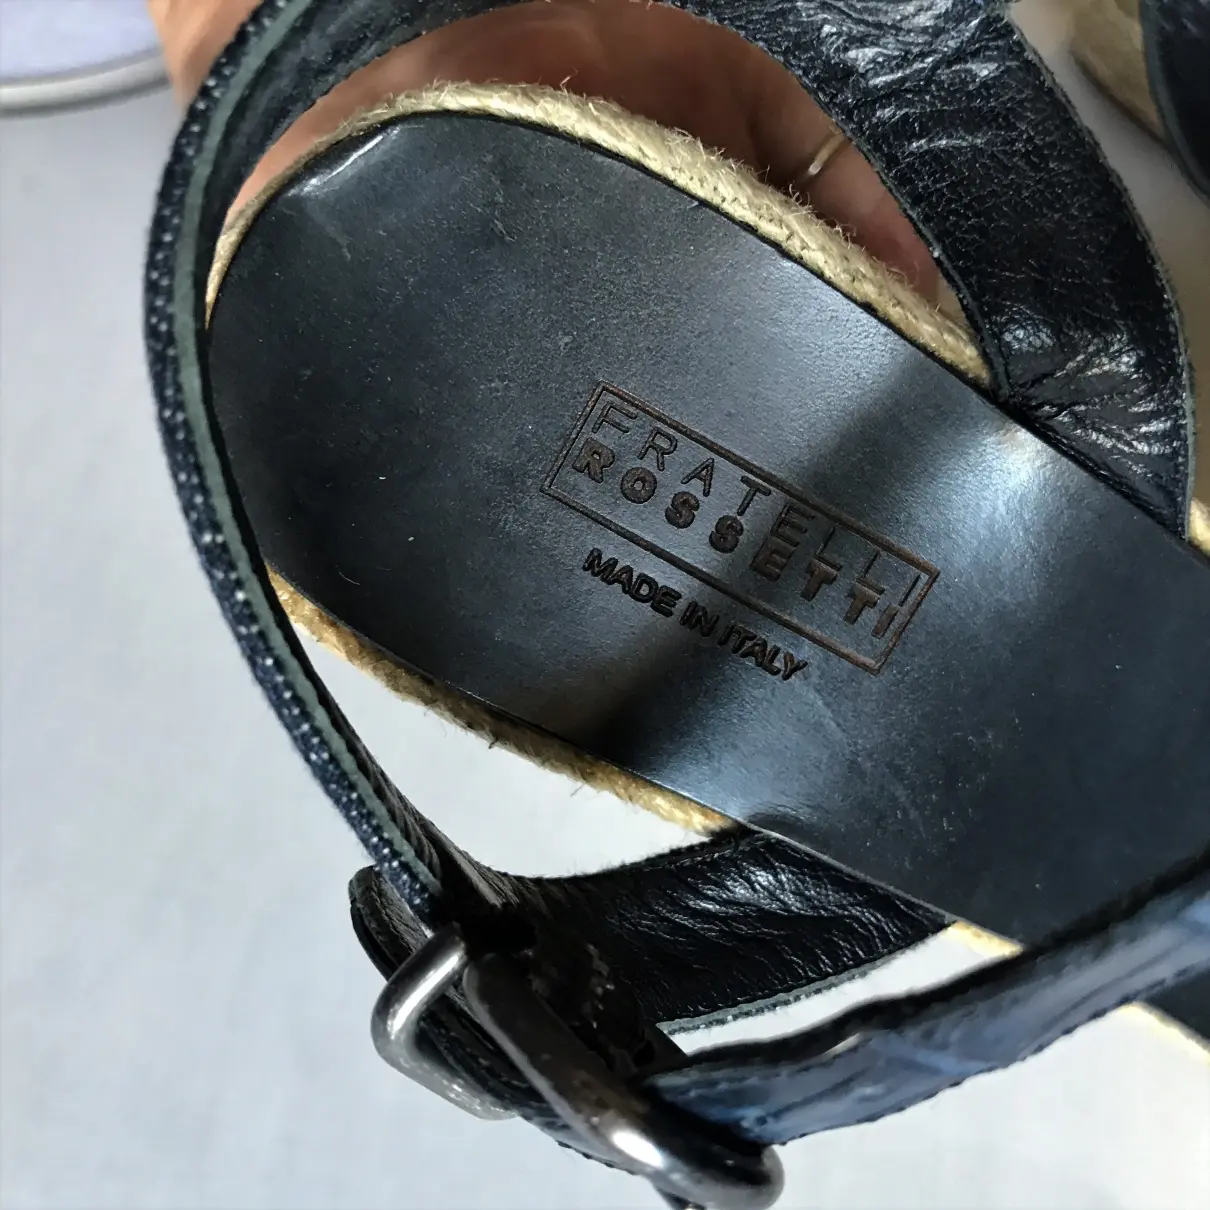 Leather sandals Fratelli Rossetti